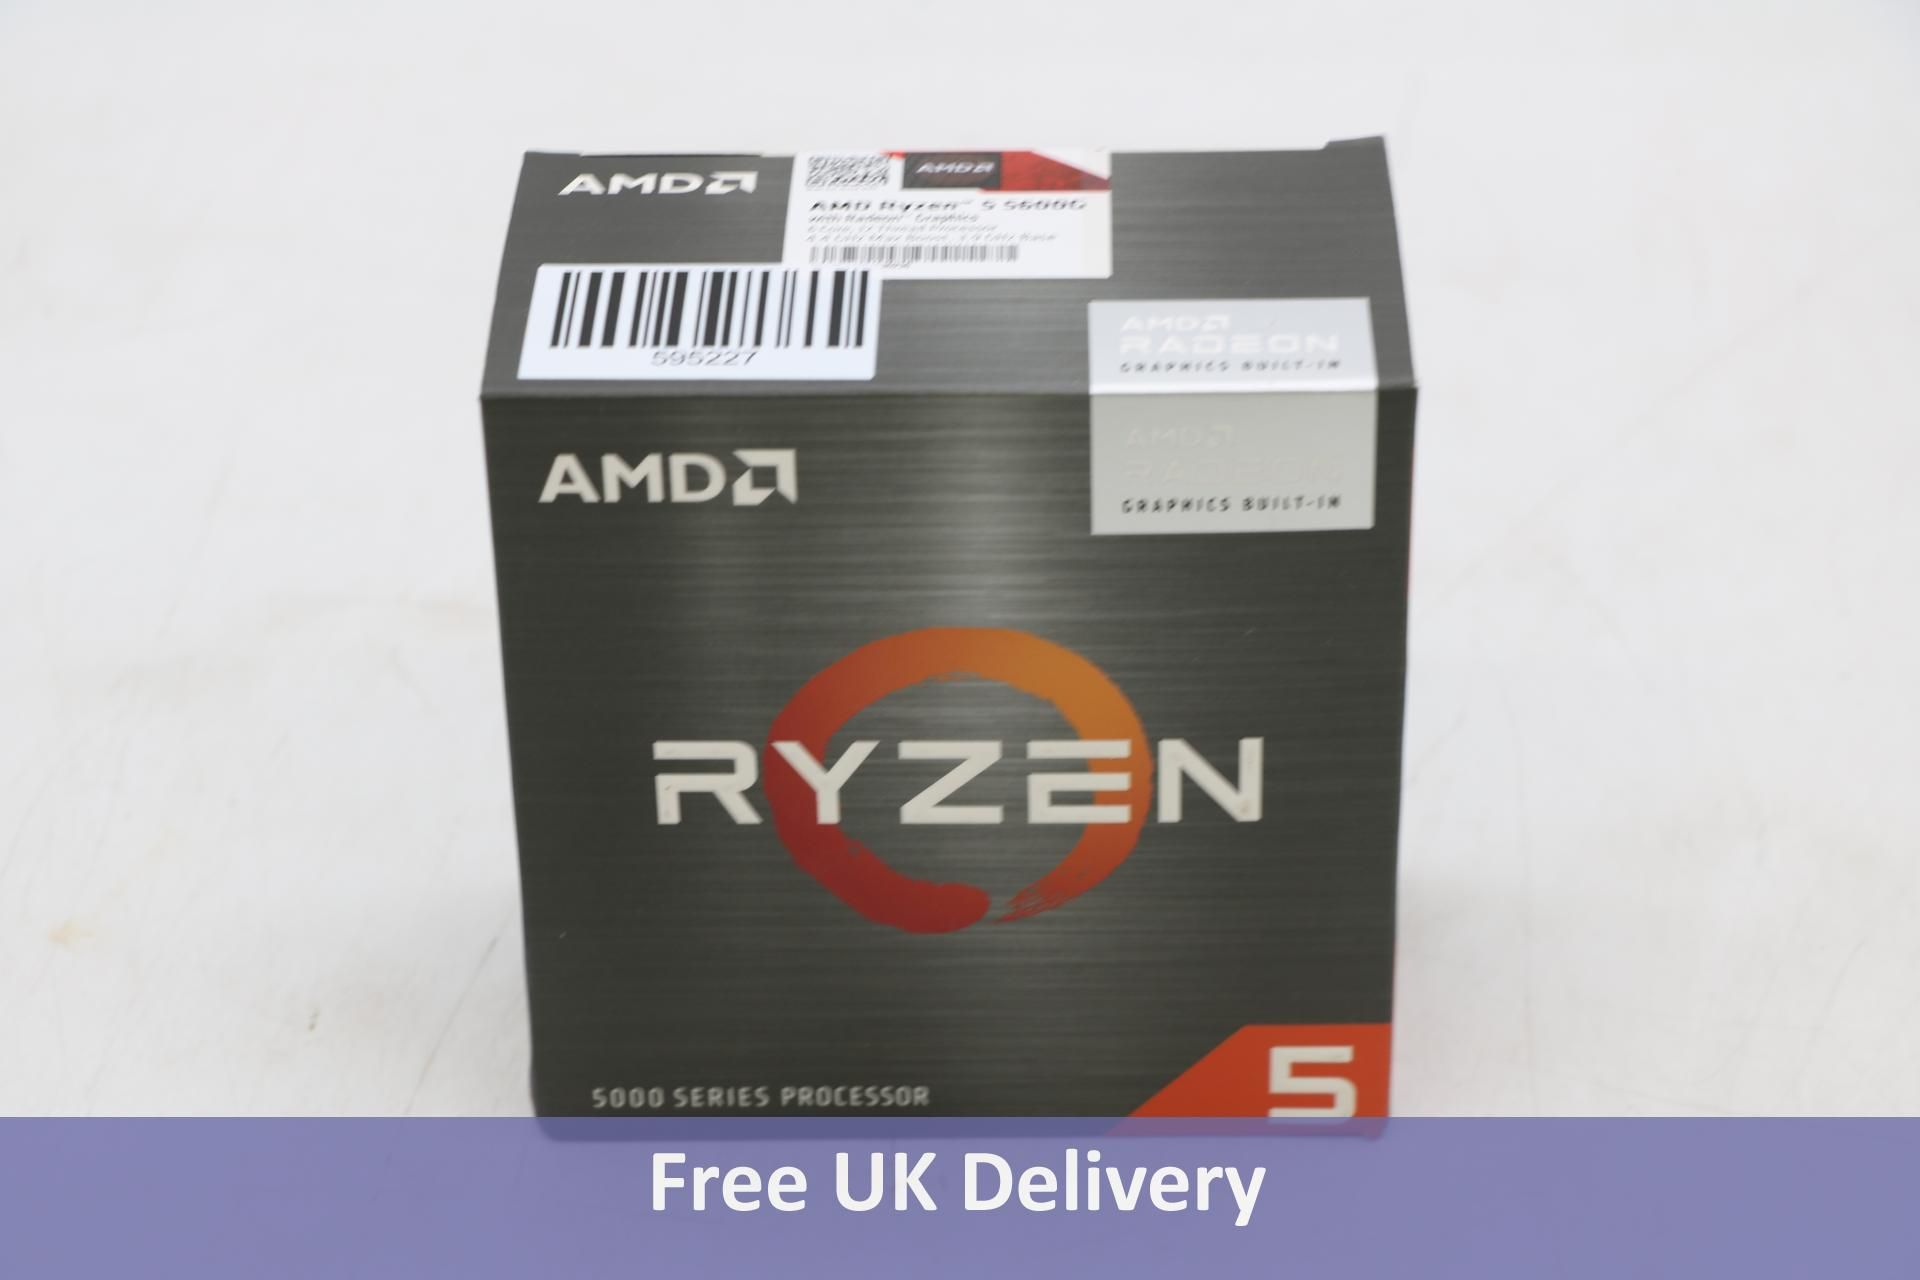 AMD Ryzen 5 5600G 3.9GHz 6 Core AM4 Processor, 12 Threads, 4.4GHz Boost, Radeon Graphics. Box damage